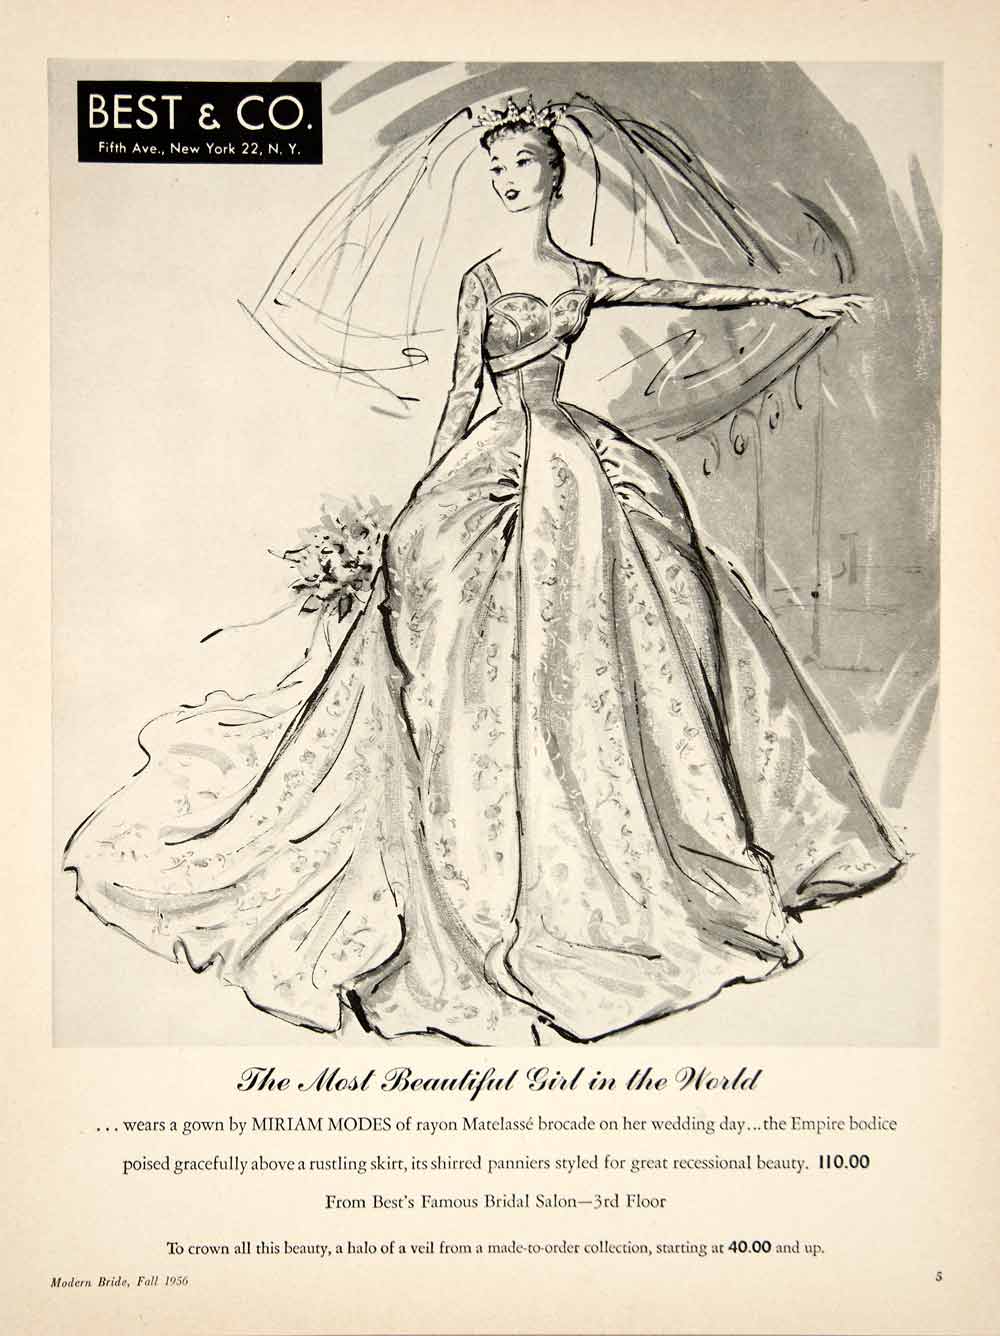 1956 Ad Miriam Modes Brocade Wedding Dress Gown Bride Veil Empire Bodice YBSM2